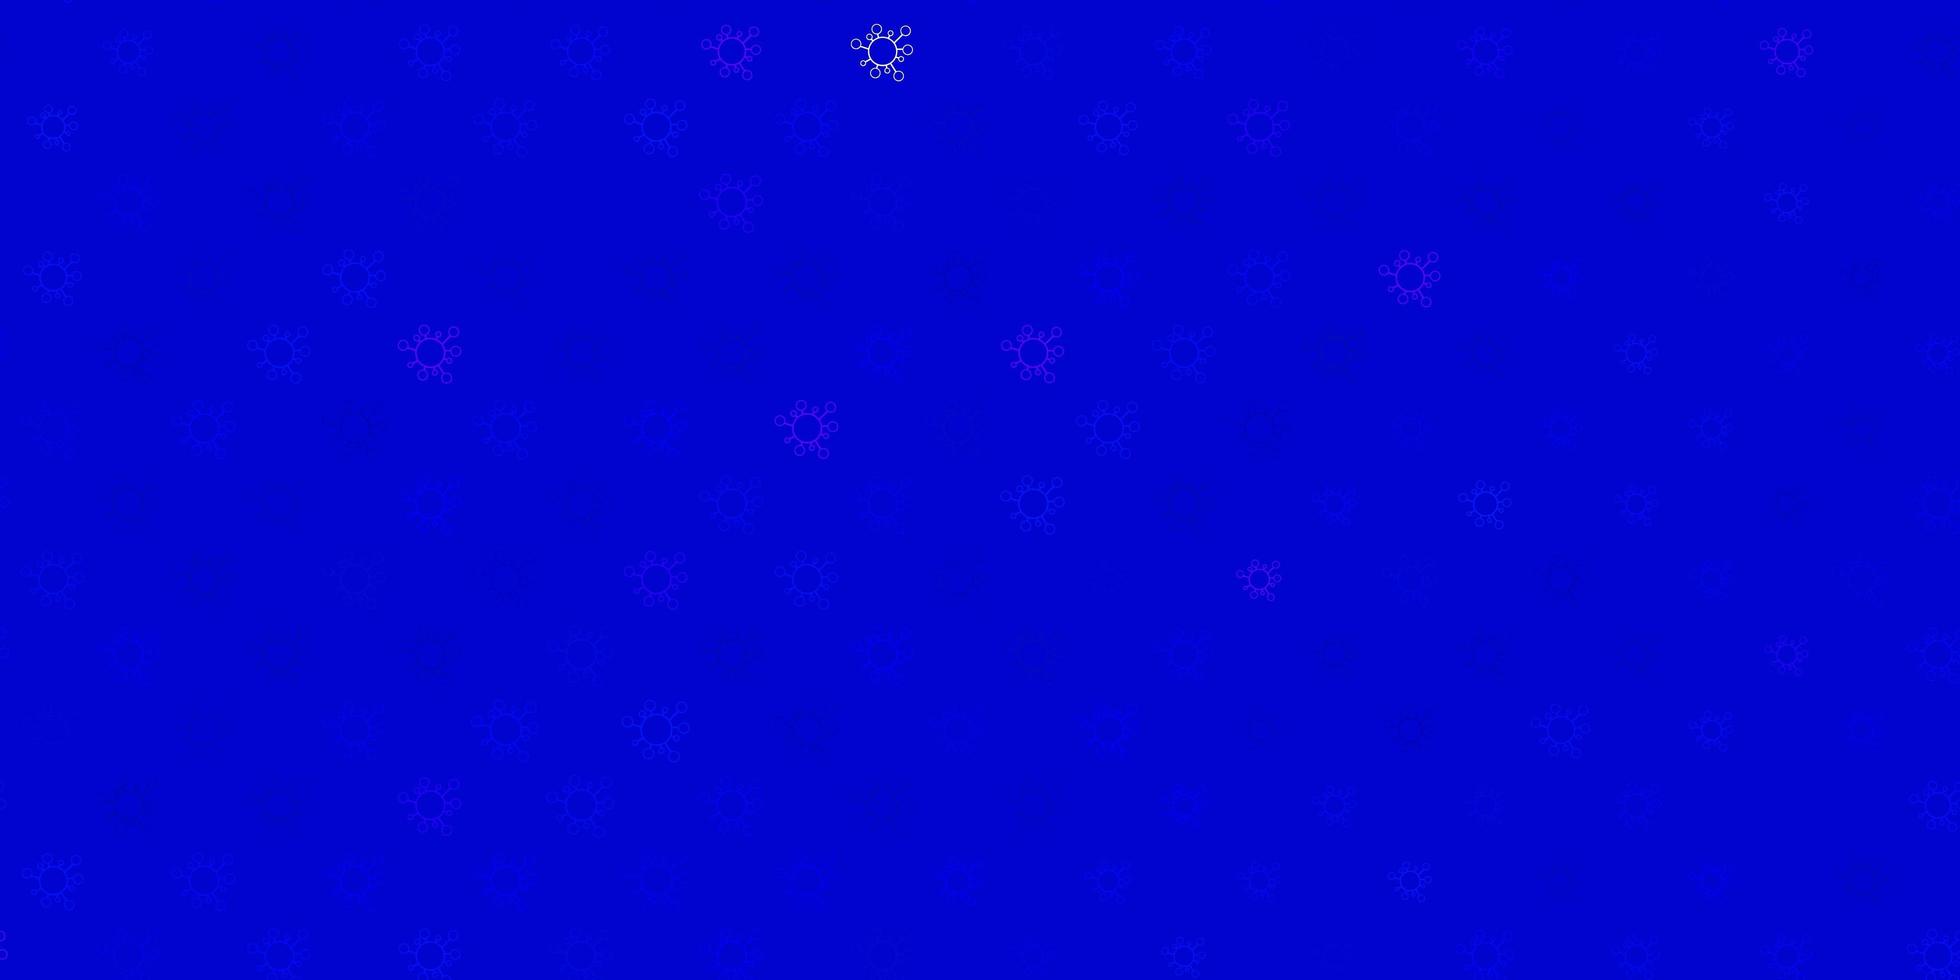 textura vector azul escuro com símbolos de doença.